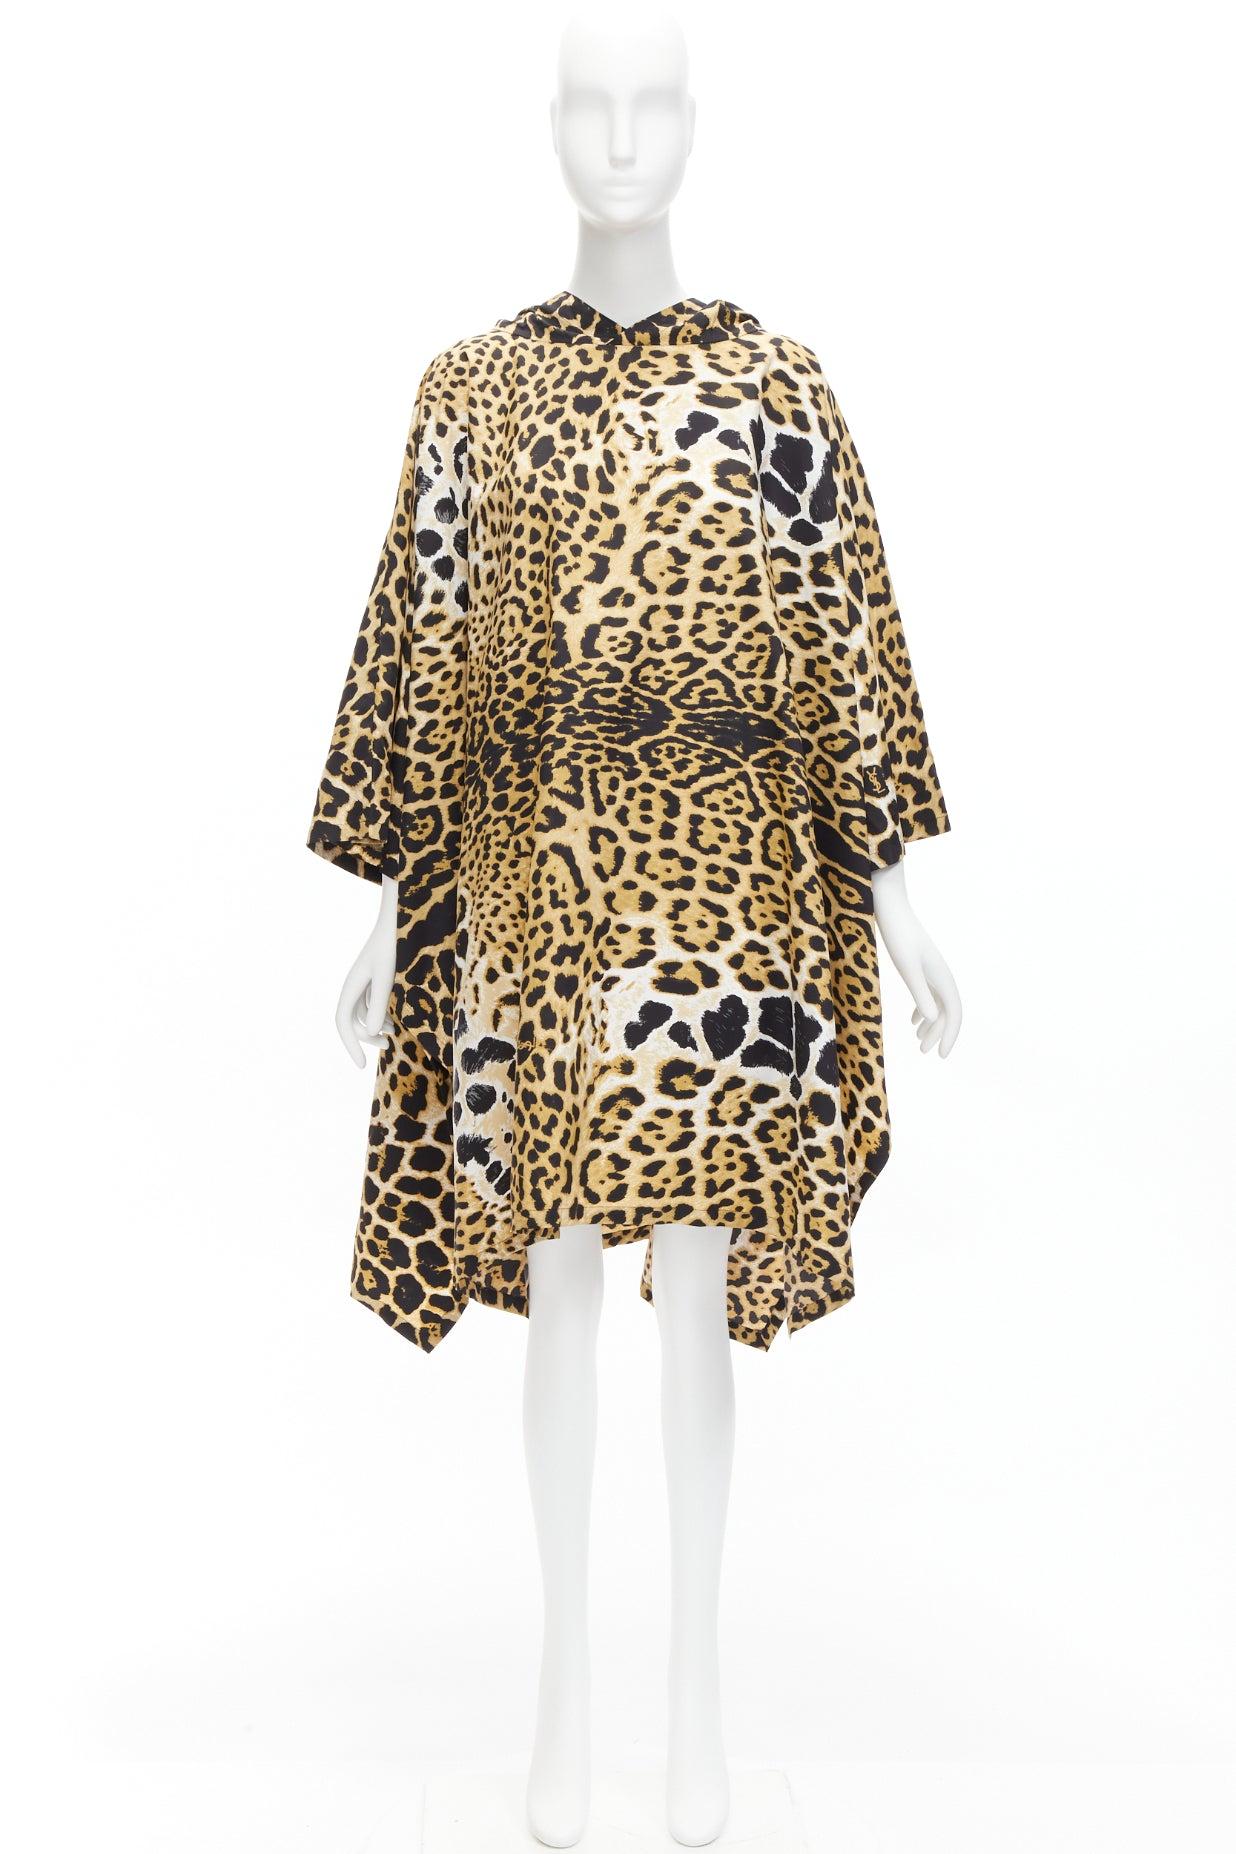 YVES SAINT LAURENT Stefano Pilati 2011 Vintage leopard spot hooded poncho FR36 S 5